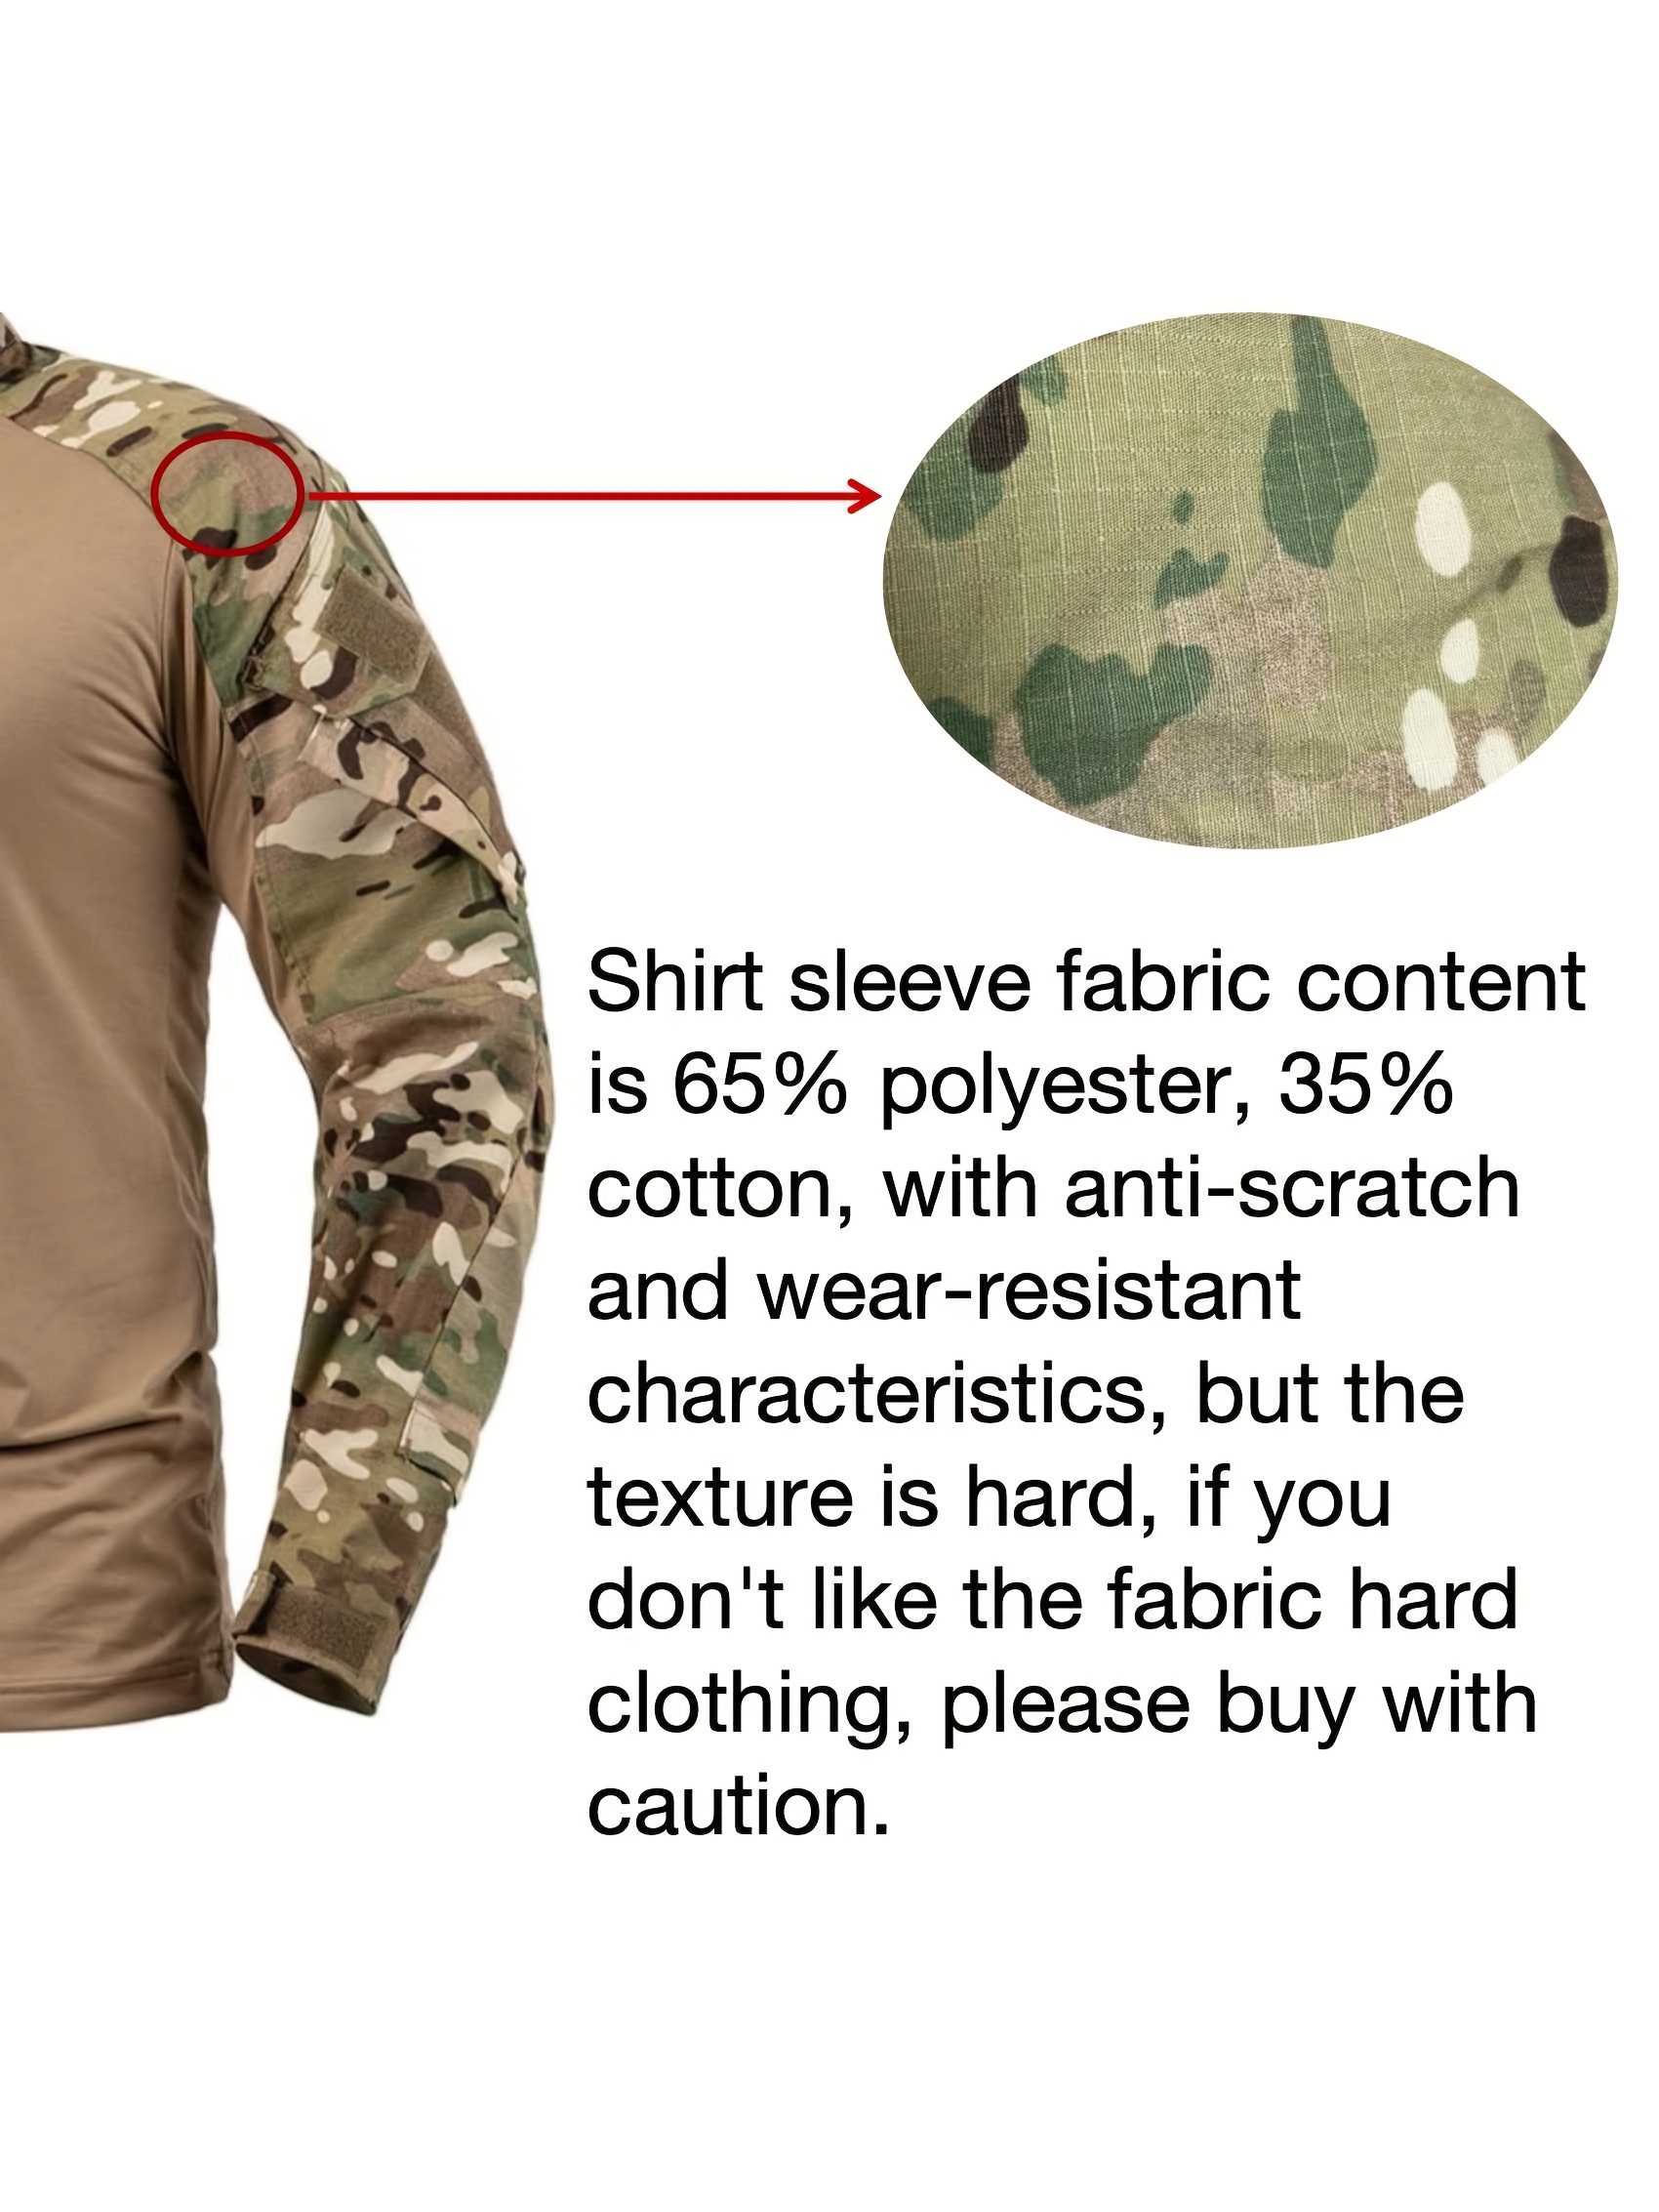  uniforme táctico camuflaje militar ropa kit militar